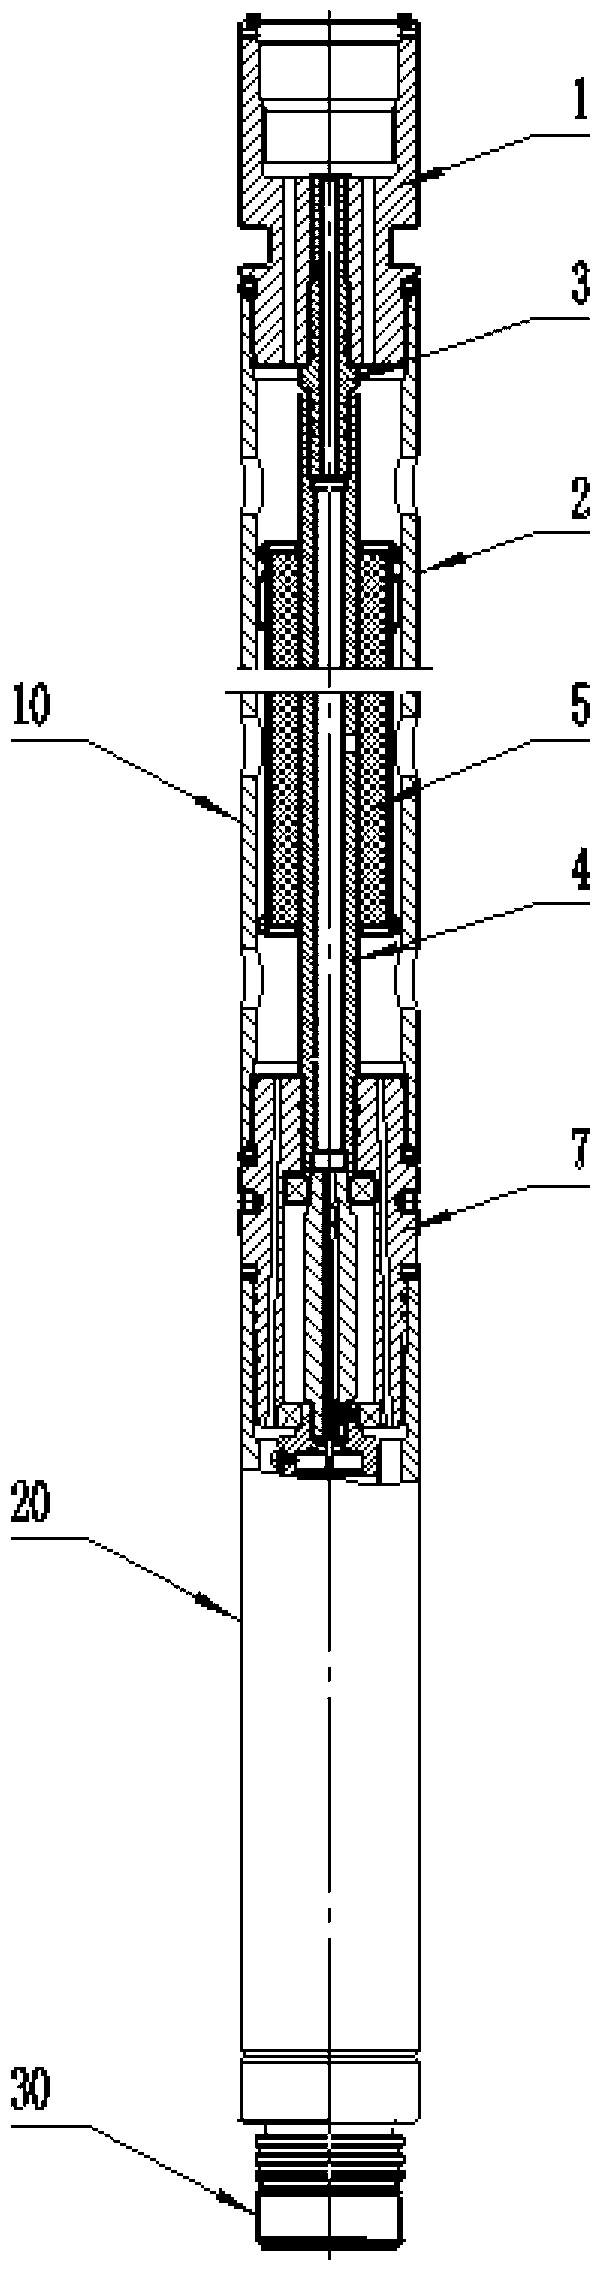 Multipole composite deep penetration perforation device